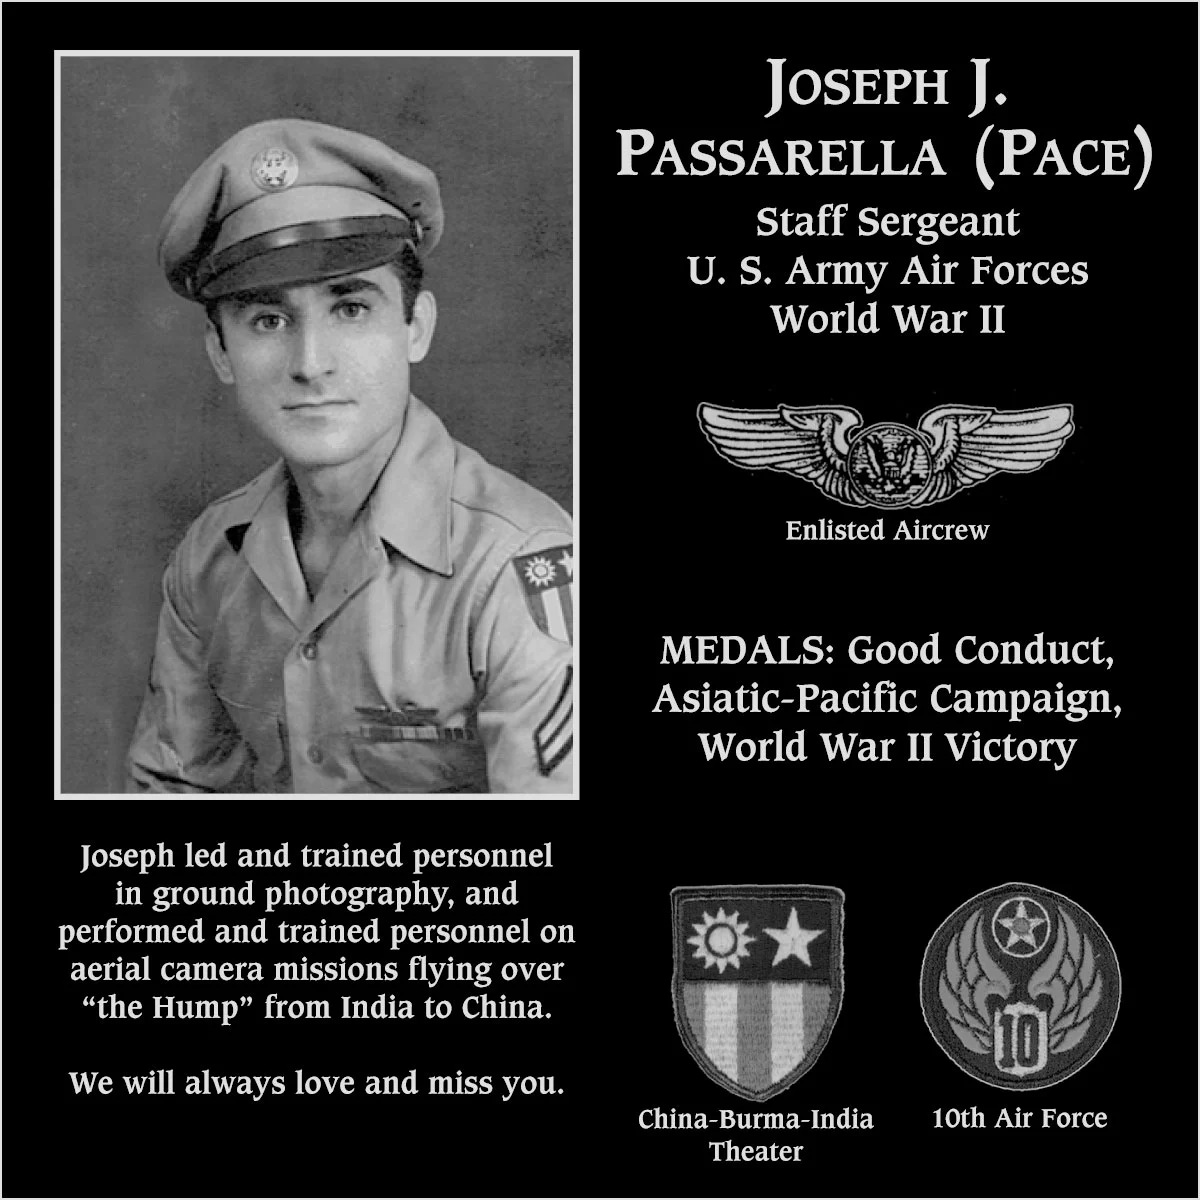 Joseph J “Pace” Passarella